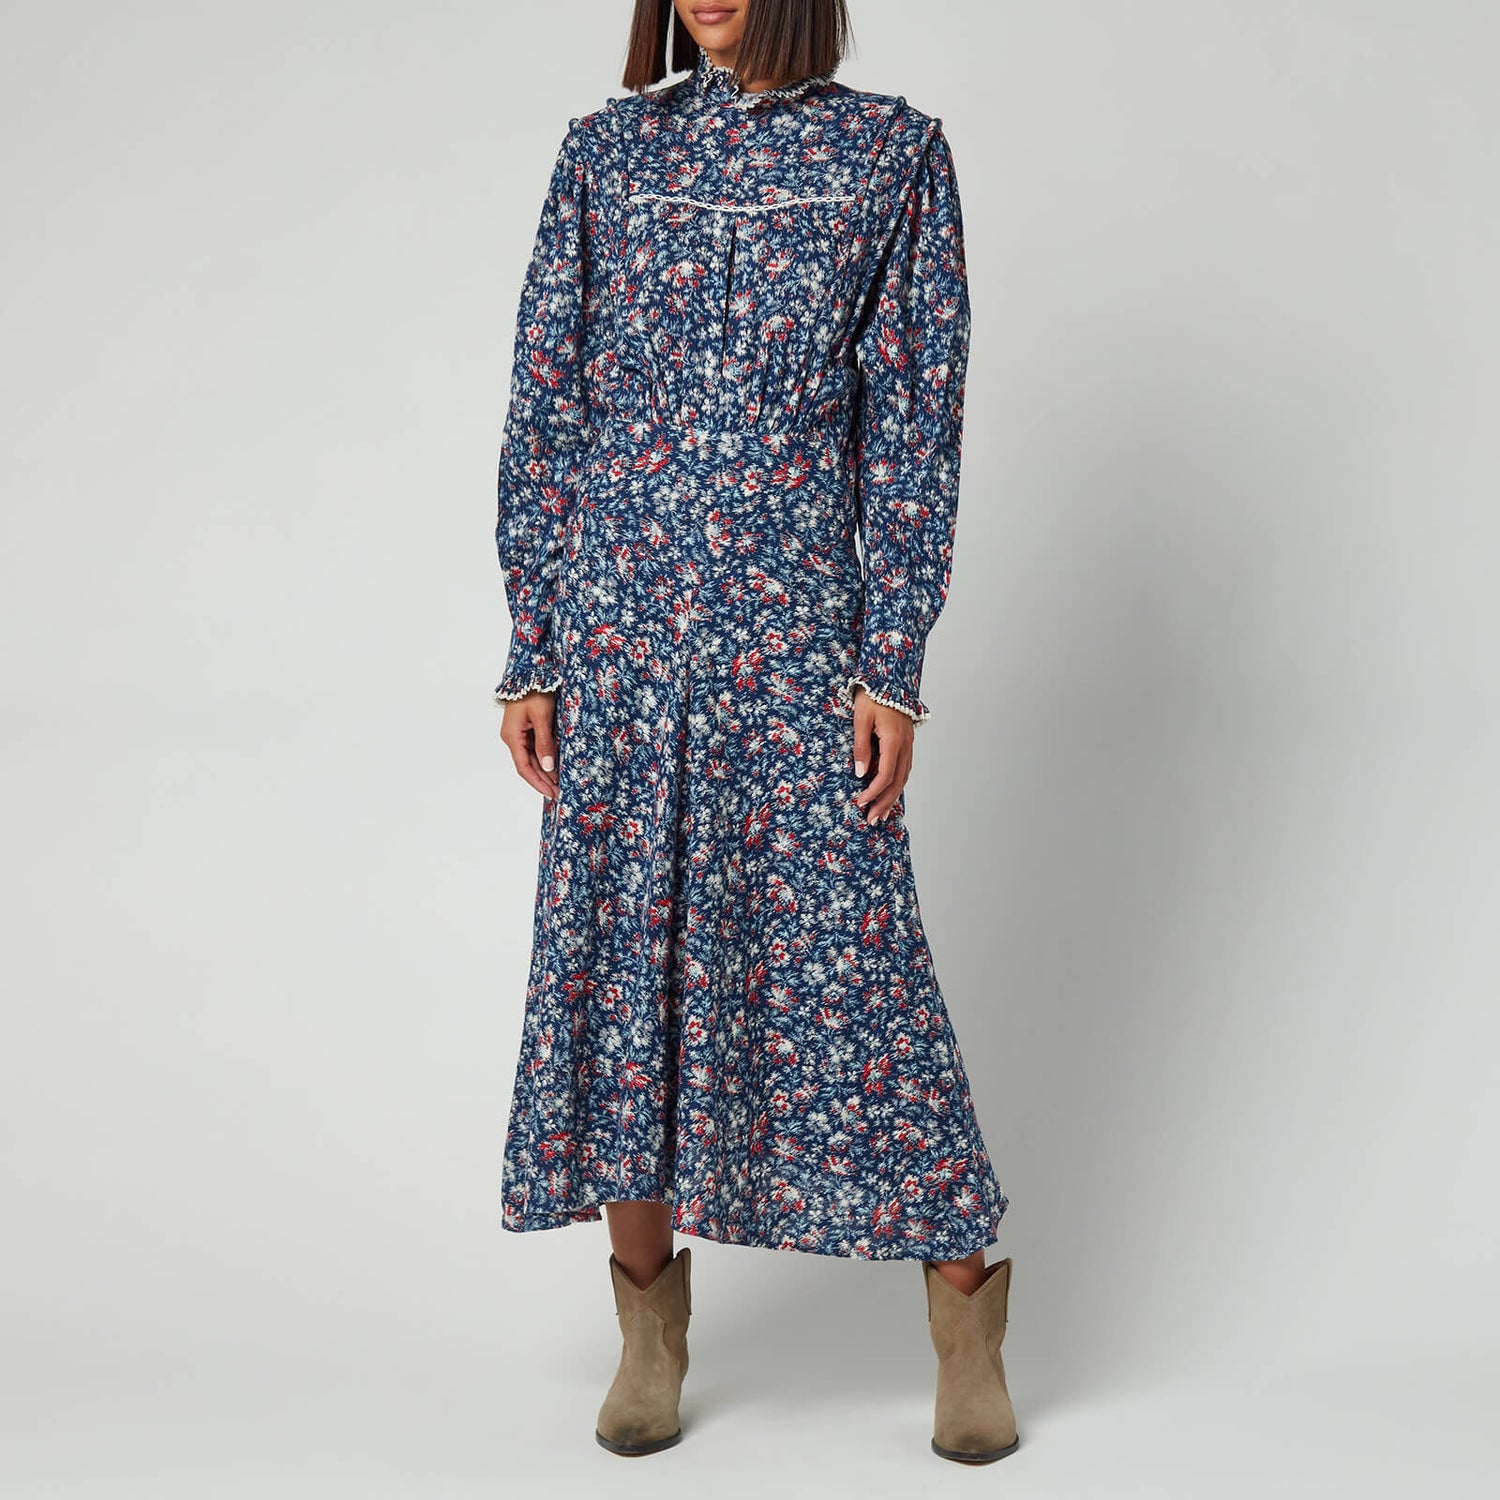 Isabel Marant Etoile Women's Darcy Dress - Navy - EU36/UK8